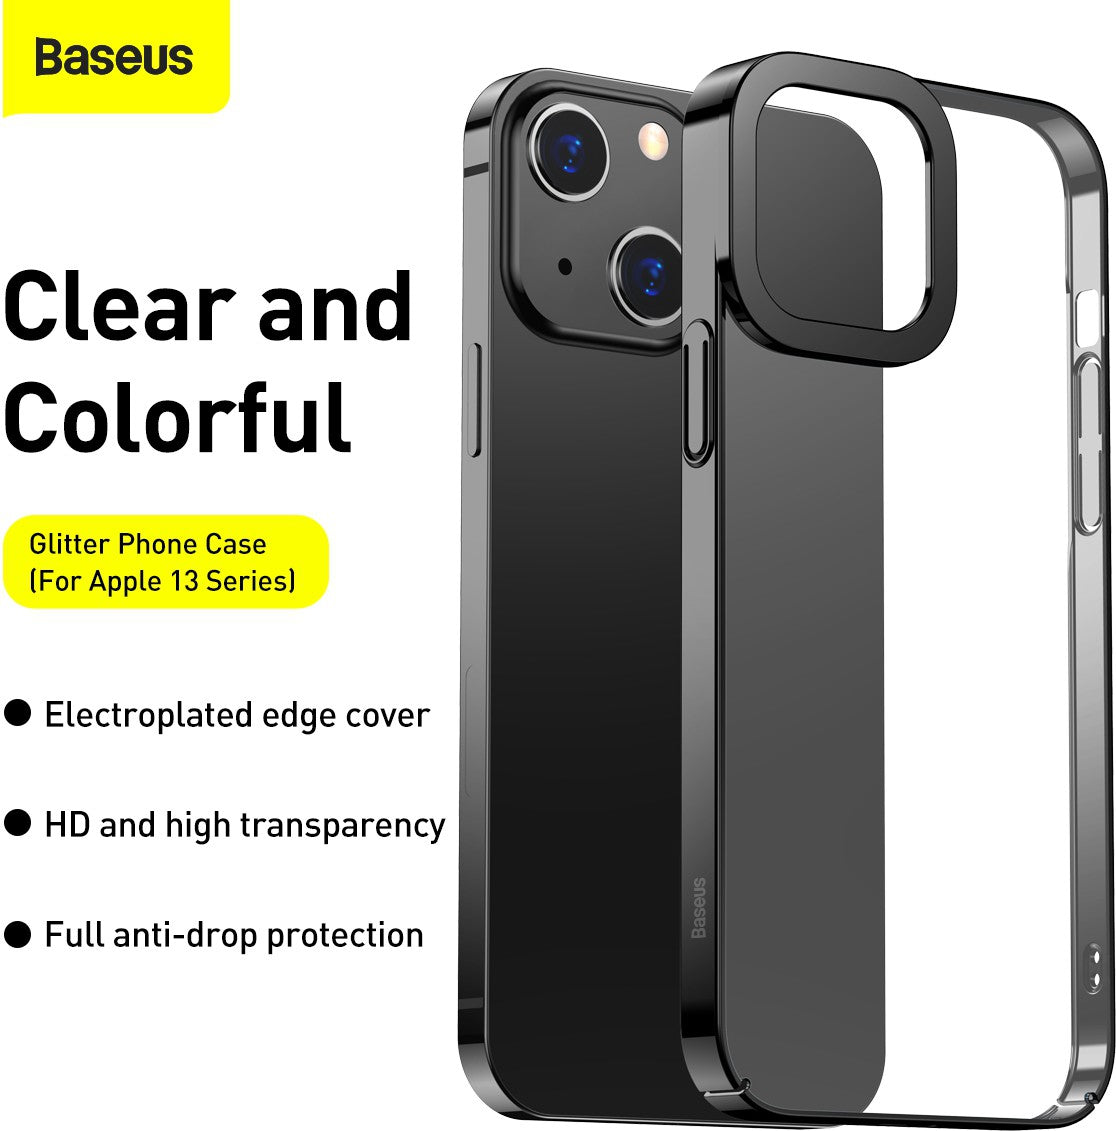 Baseus Glitter Hard PC Case Transparent Electroplating Cover for iPhone 13 Models 2021